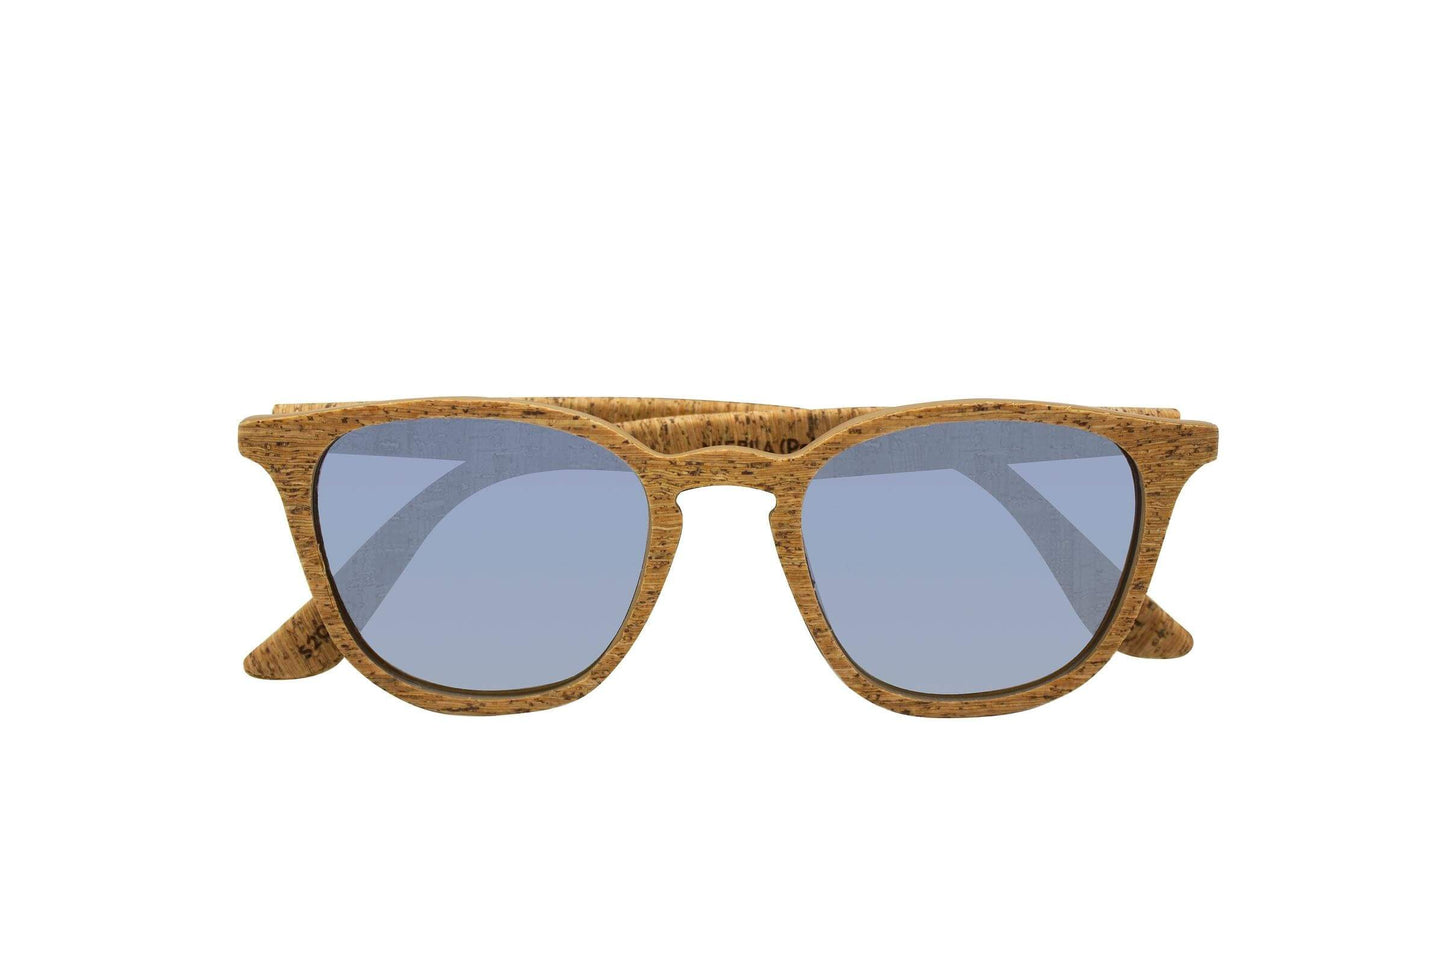 Parafina Niebla Recycled Cork Sunglasses